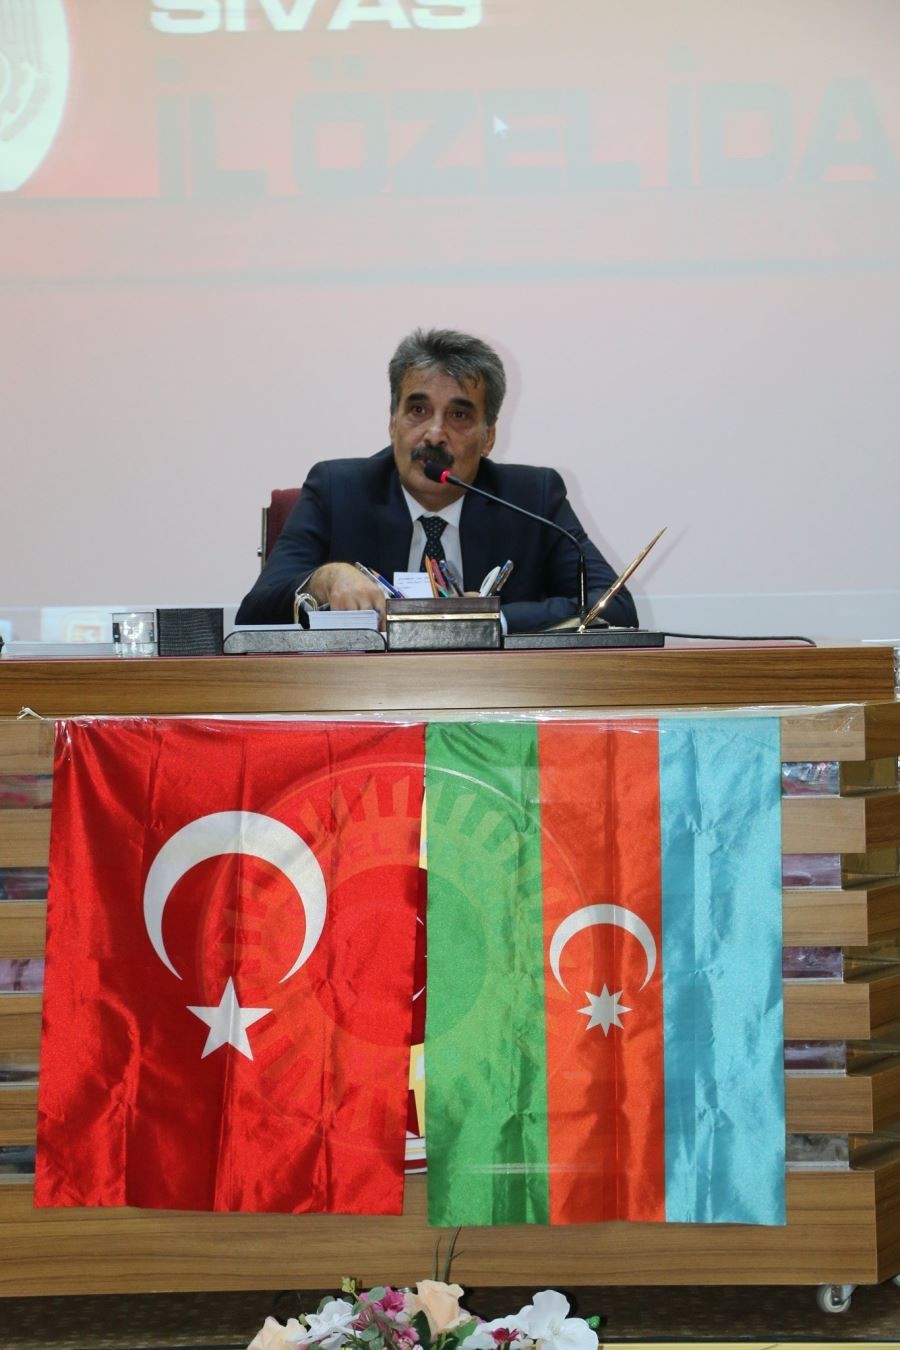 Sivas İl Genel Meclisinden Azerbaycan’a destek